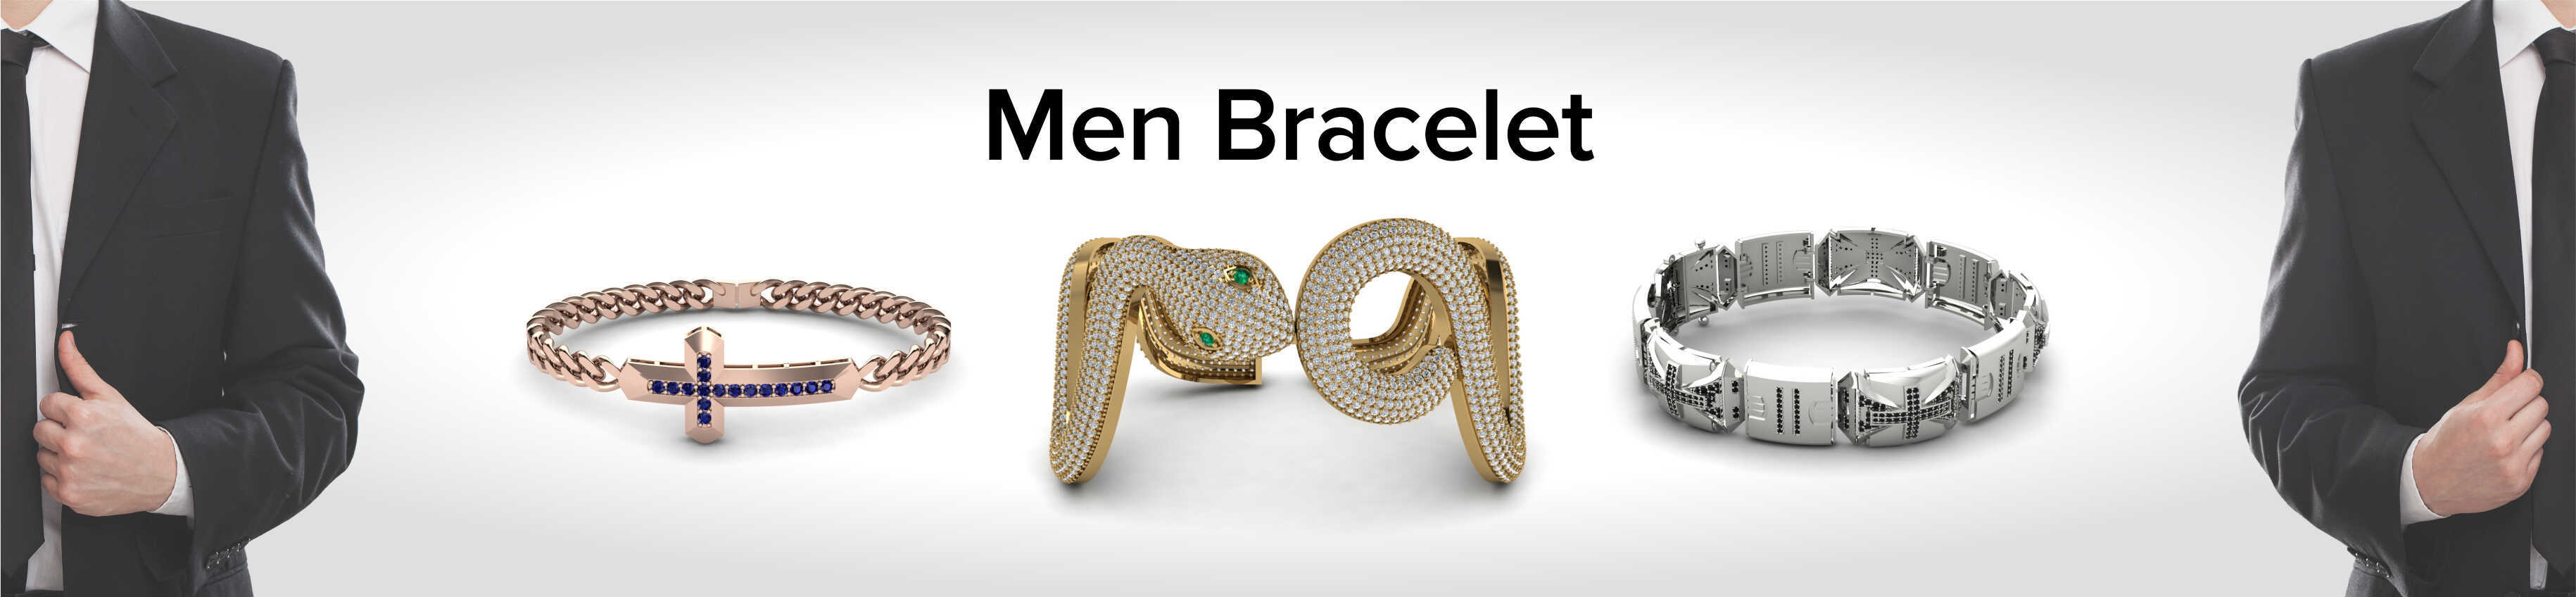 Men Bracelets Banner